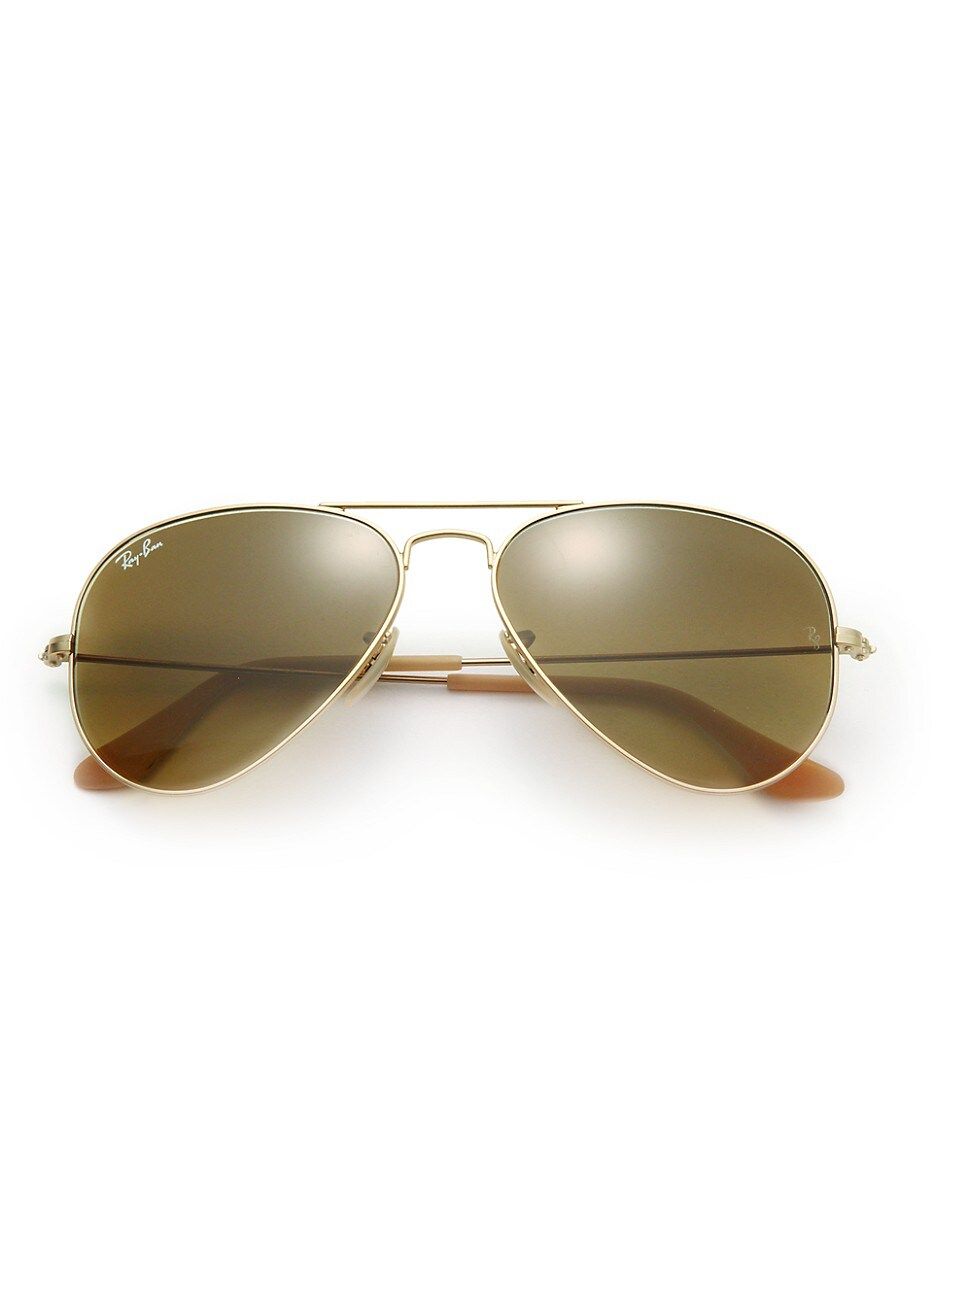 Ray-Ban Women's 55MM Aviator Sunglasses - Light Gold | Saks Fifth Avenue